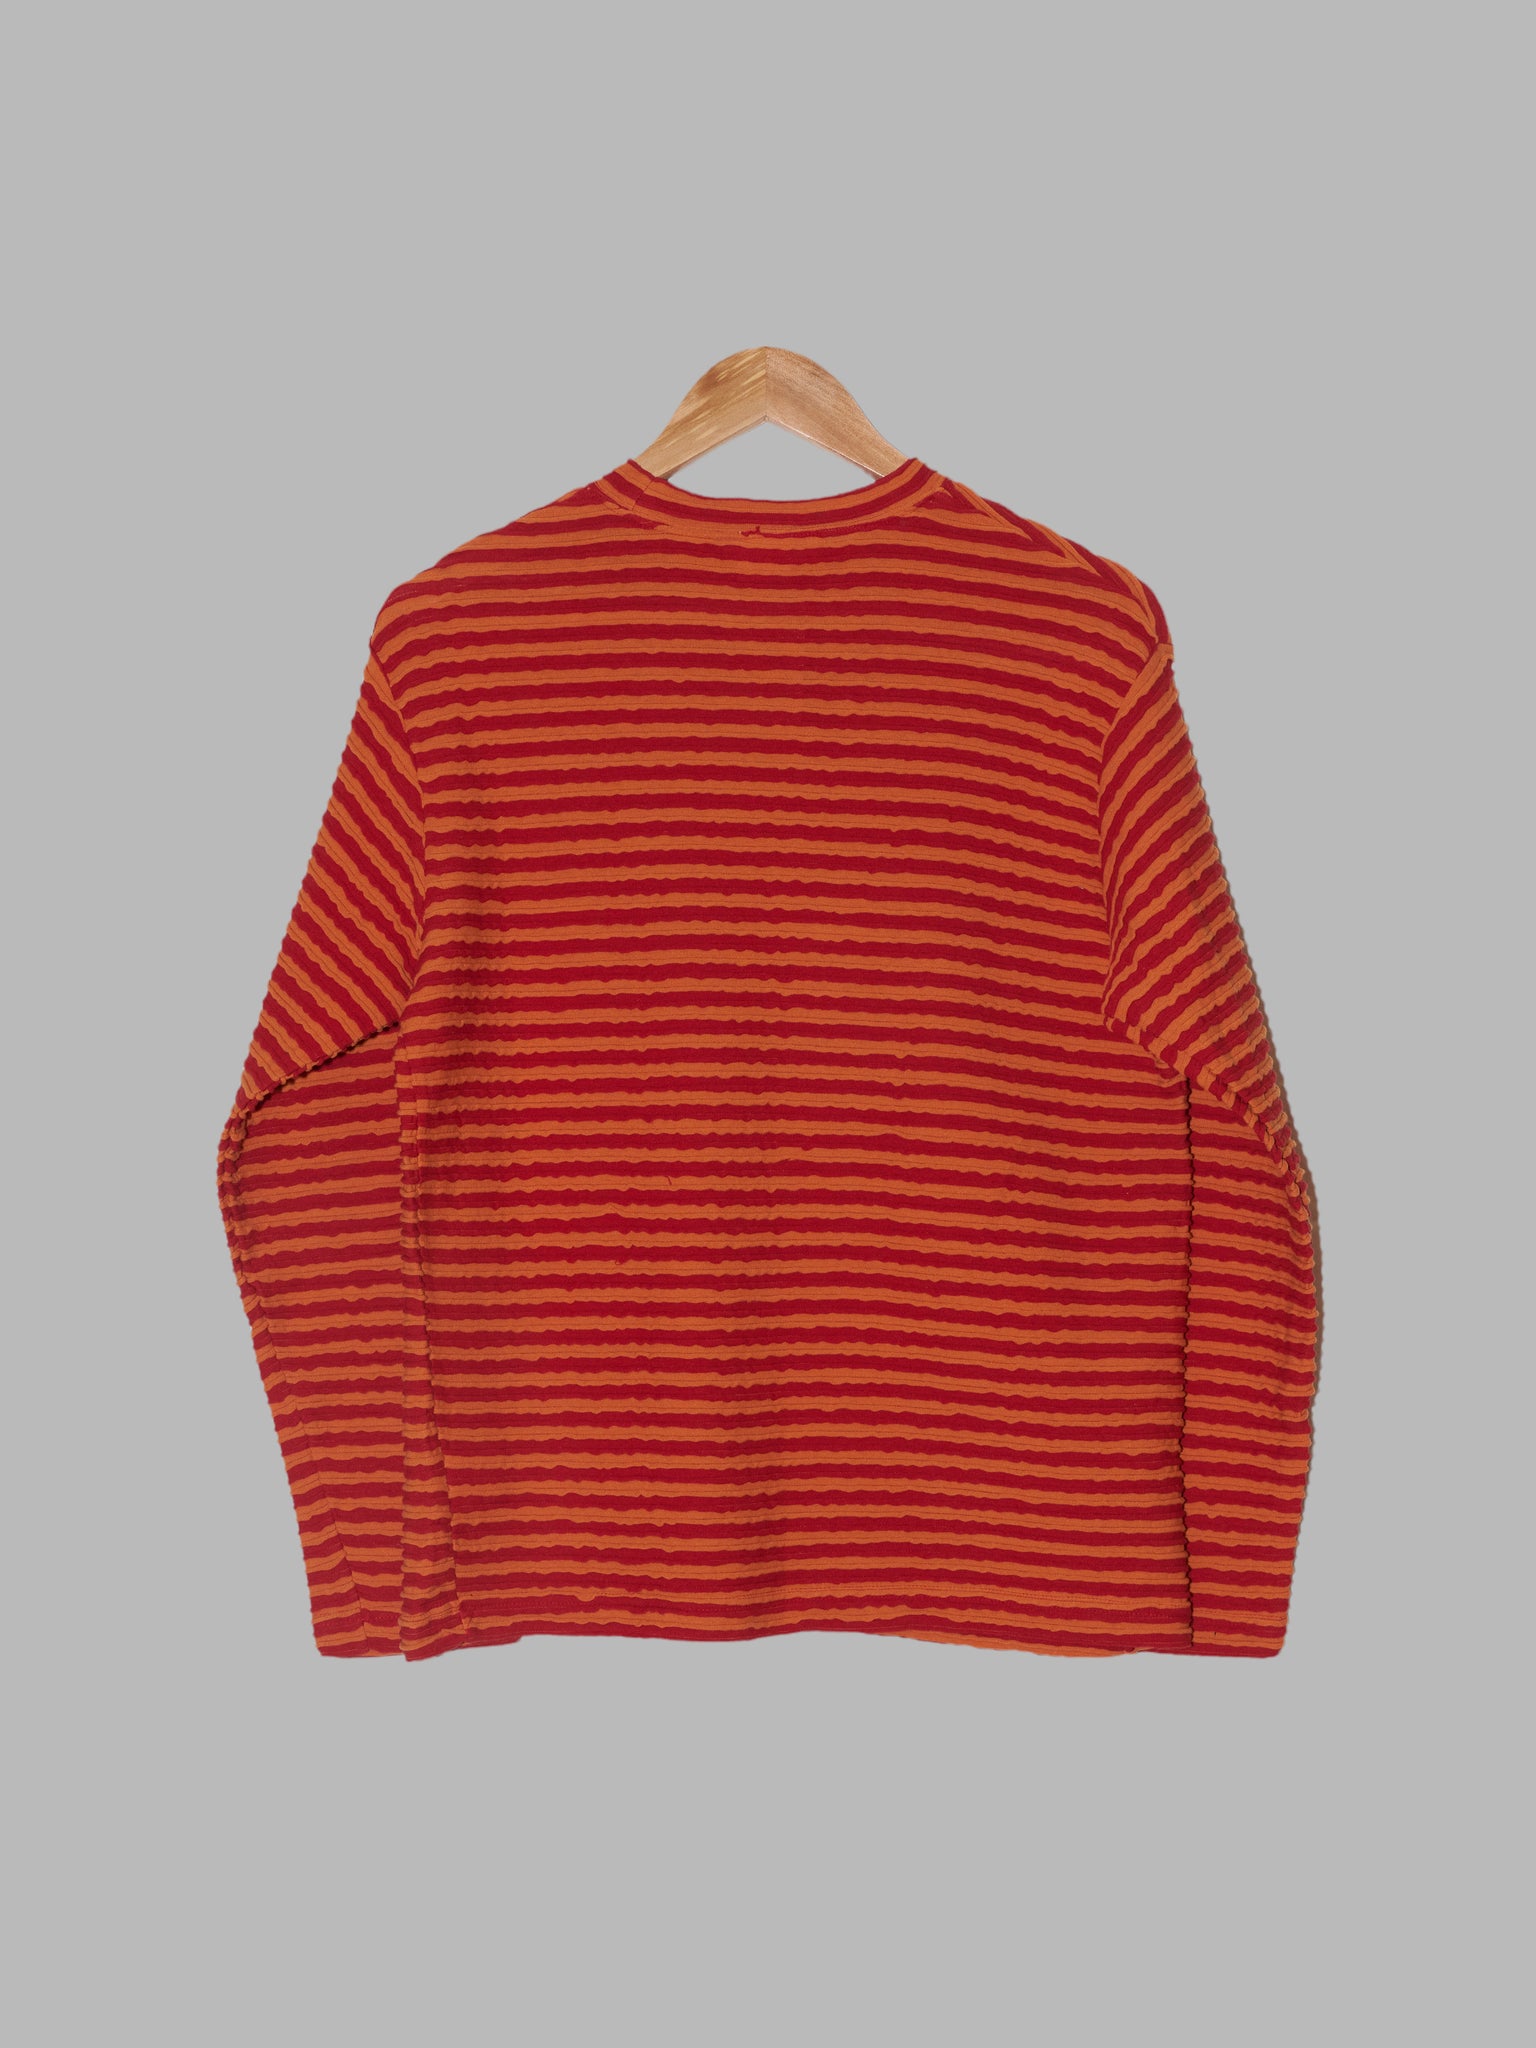 Dezert 1990s red orange striped cotton jersey long sleeve top - size M